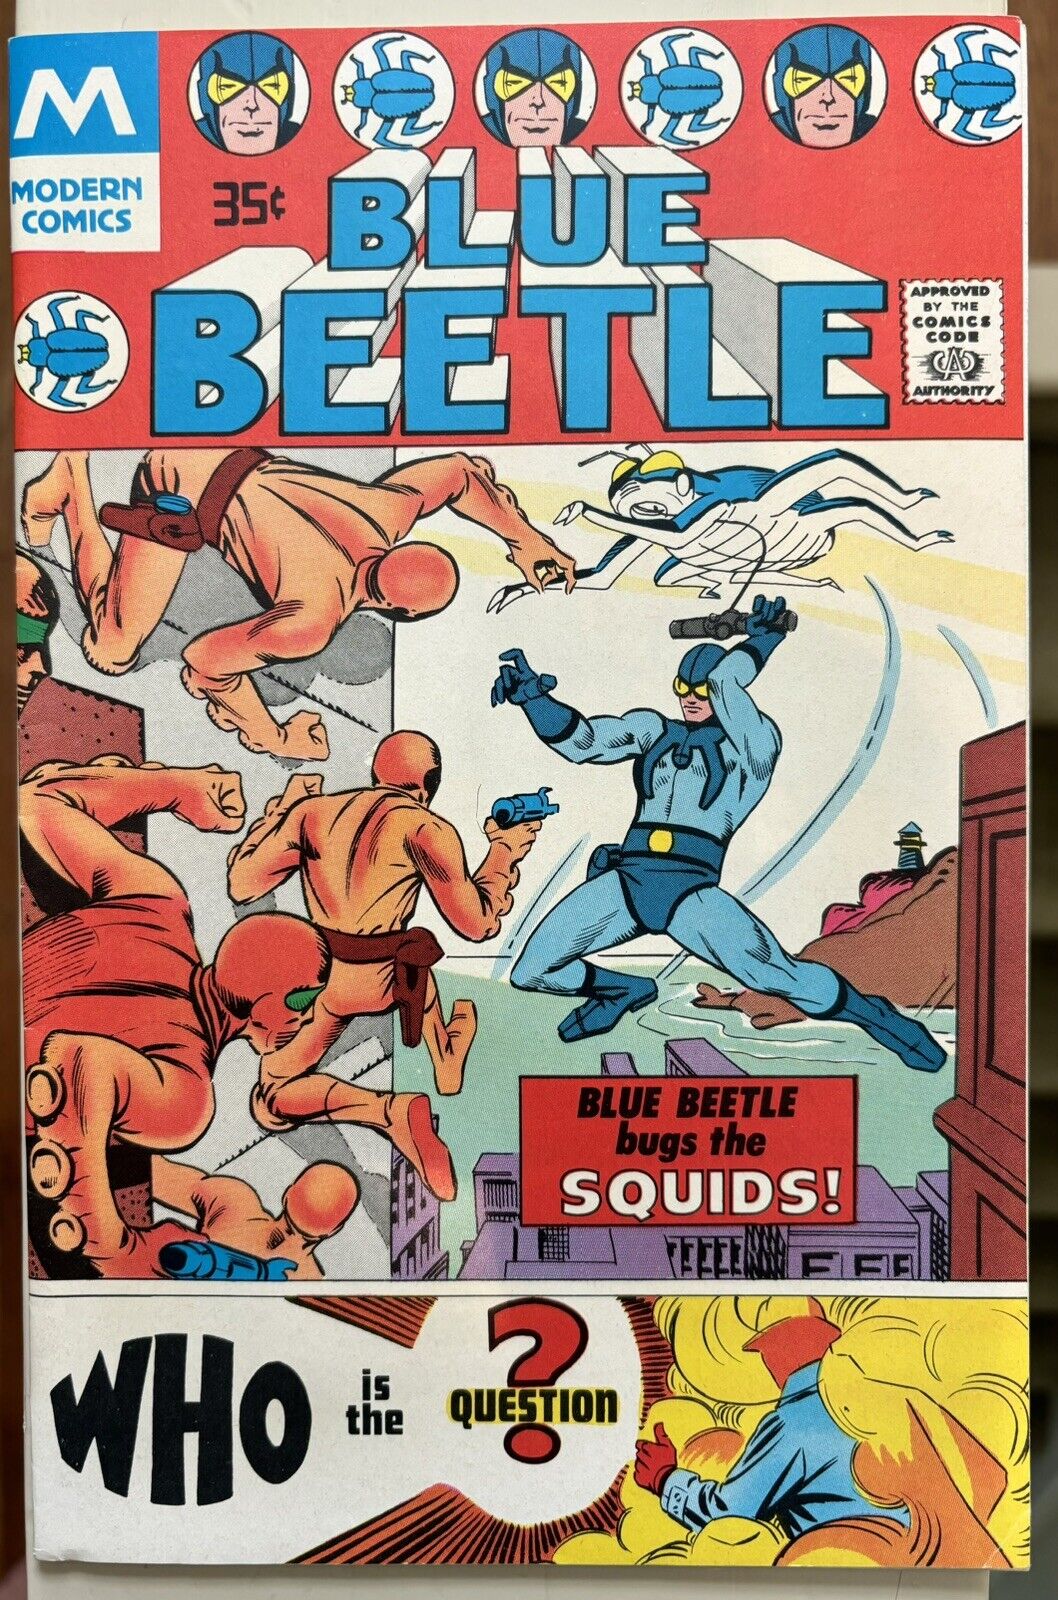 BLUE BEETLE #1 1977 1ST. APPEARANCE THE QUESTION MODERN COMICS.